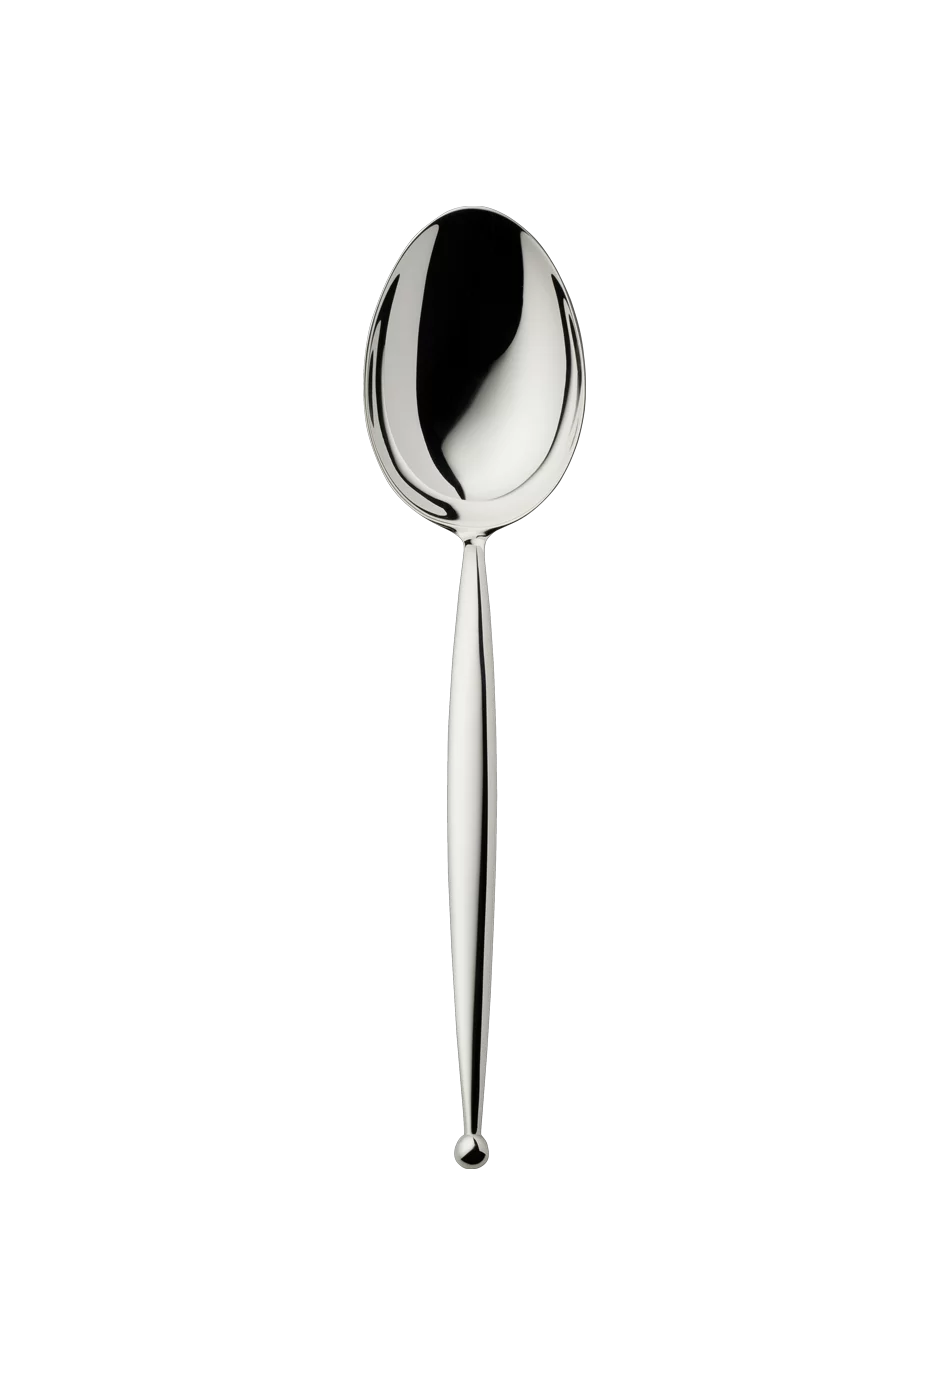 Gio Menu Spoon (150g massive silverplated)